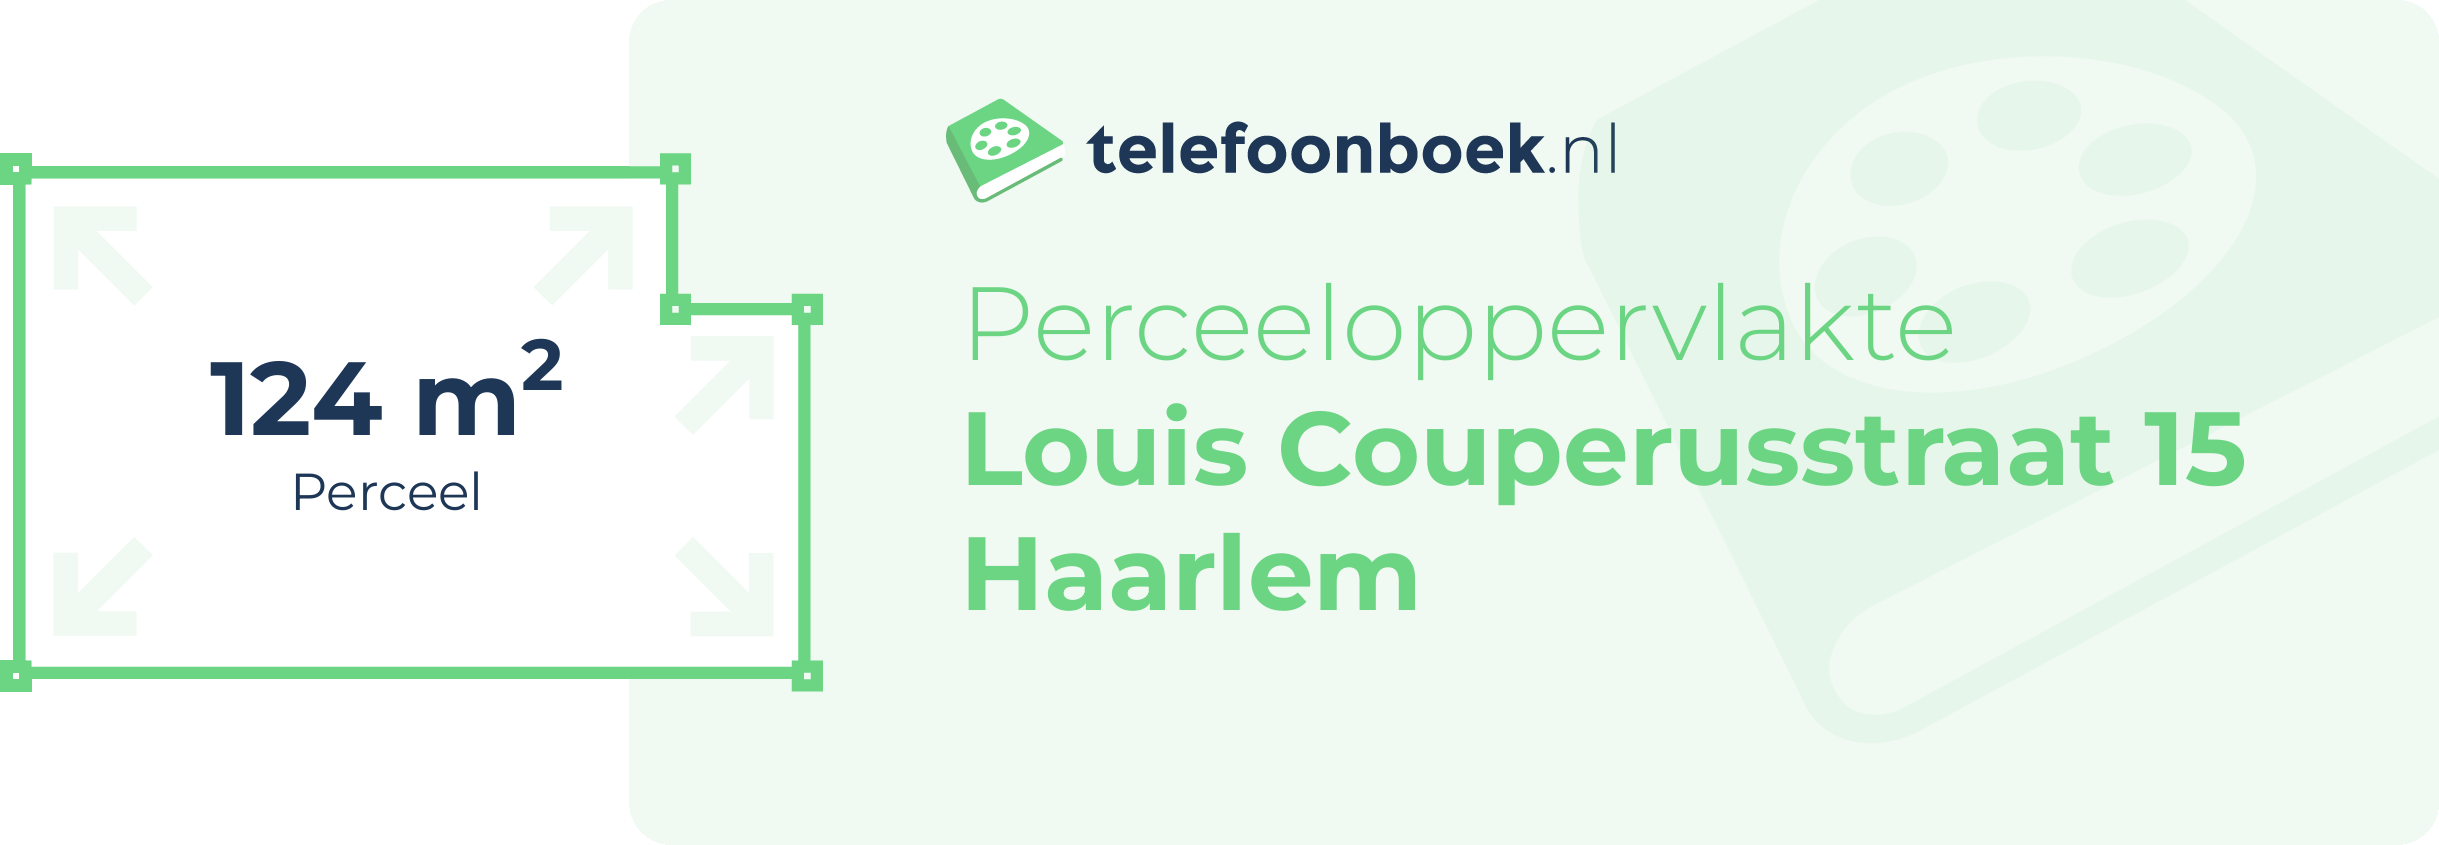 Perceeloppervlakte Louis Couperusstraat 15 Haarlem